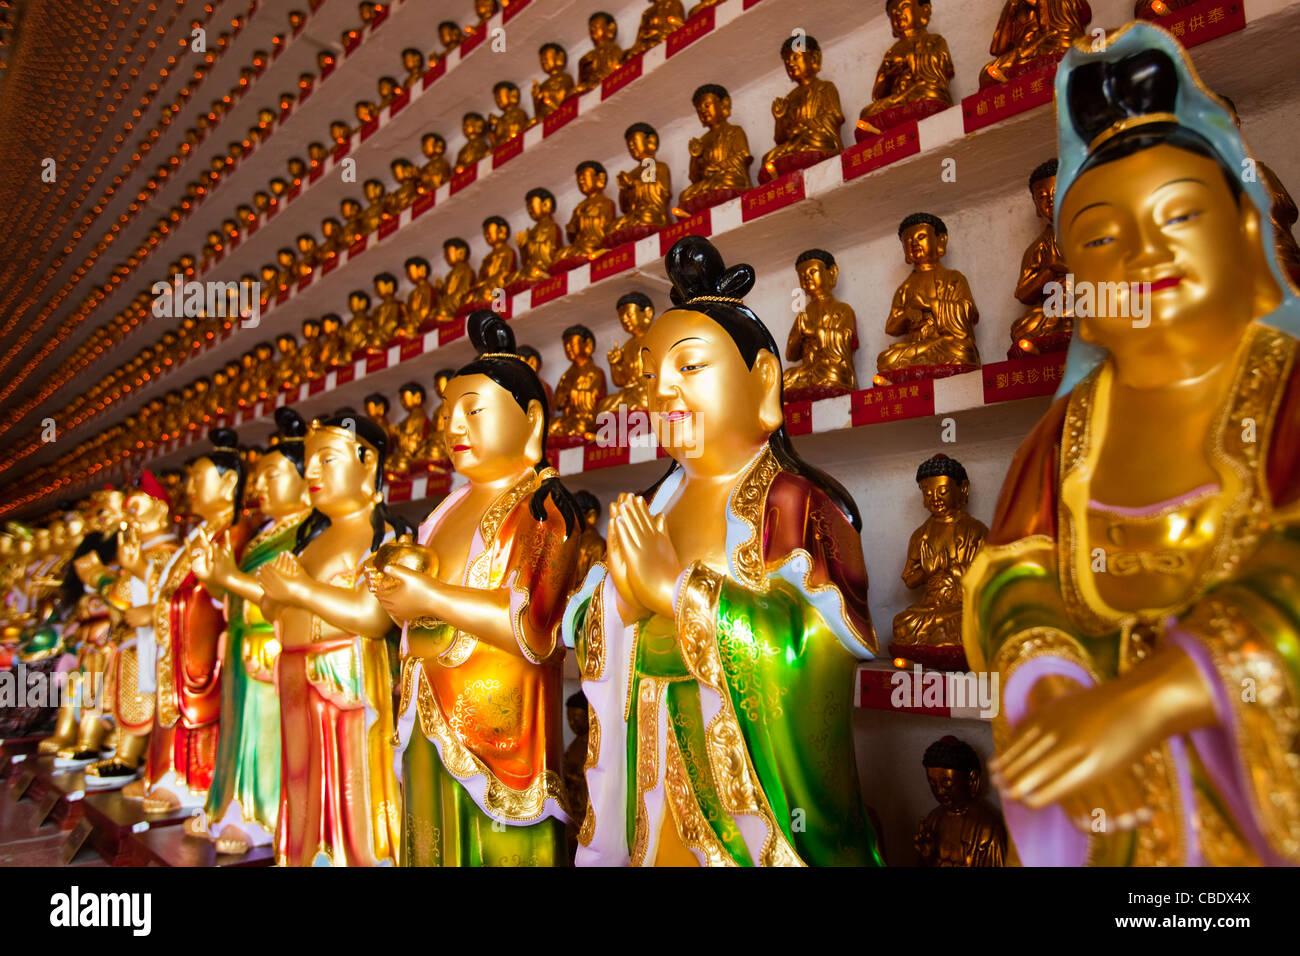 Colorful buddha statues in Chinese shop, Hong Kong, China Stock Photo